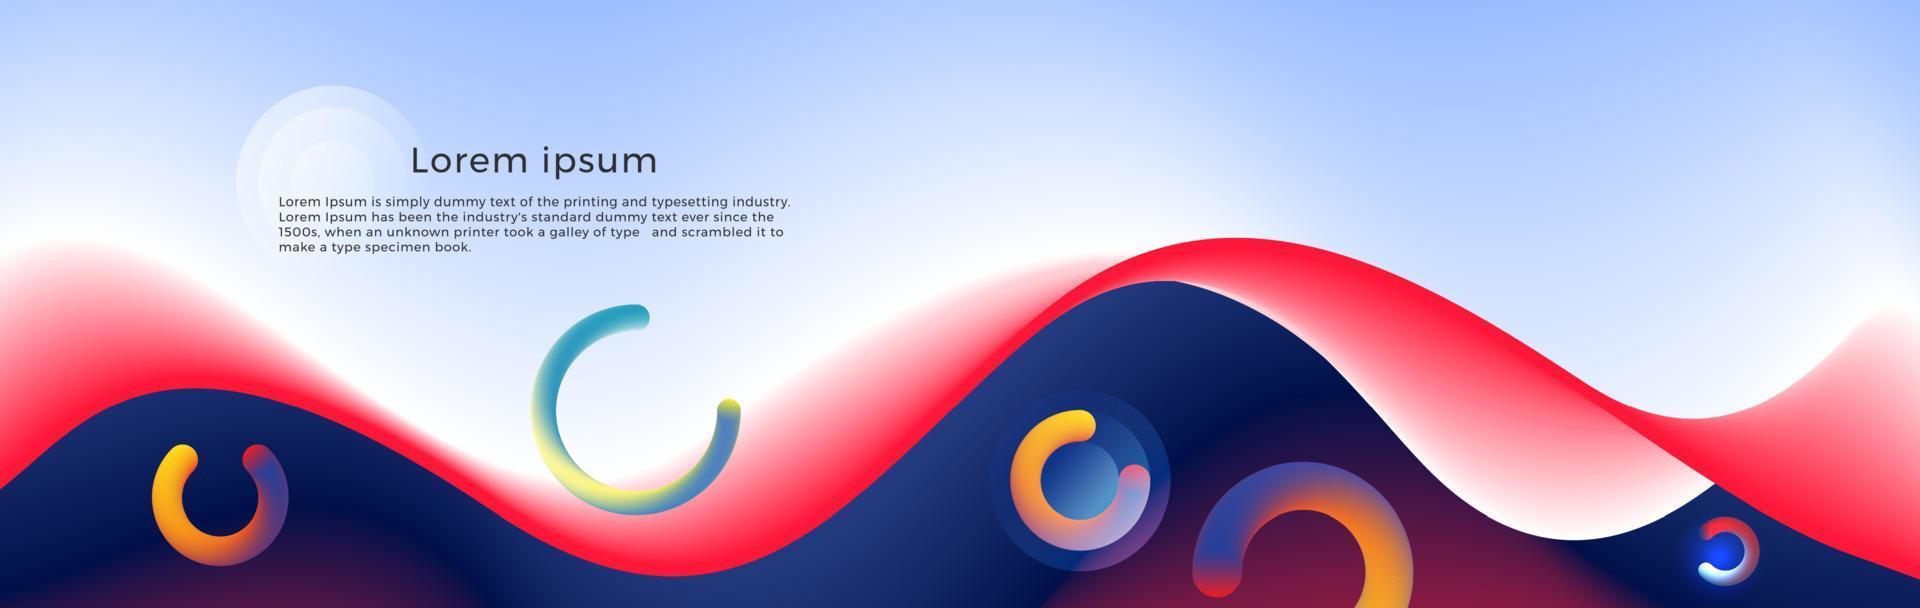 diseño de banner moderno abstracto. degradado colorido con onda líquida. vector